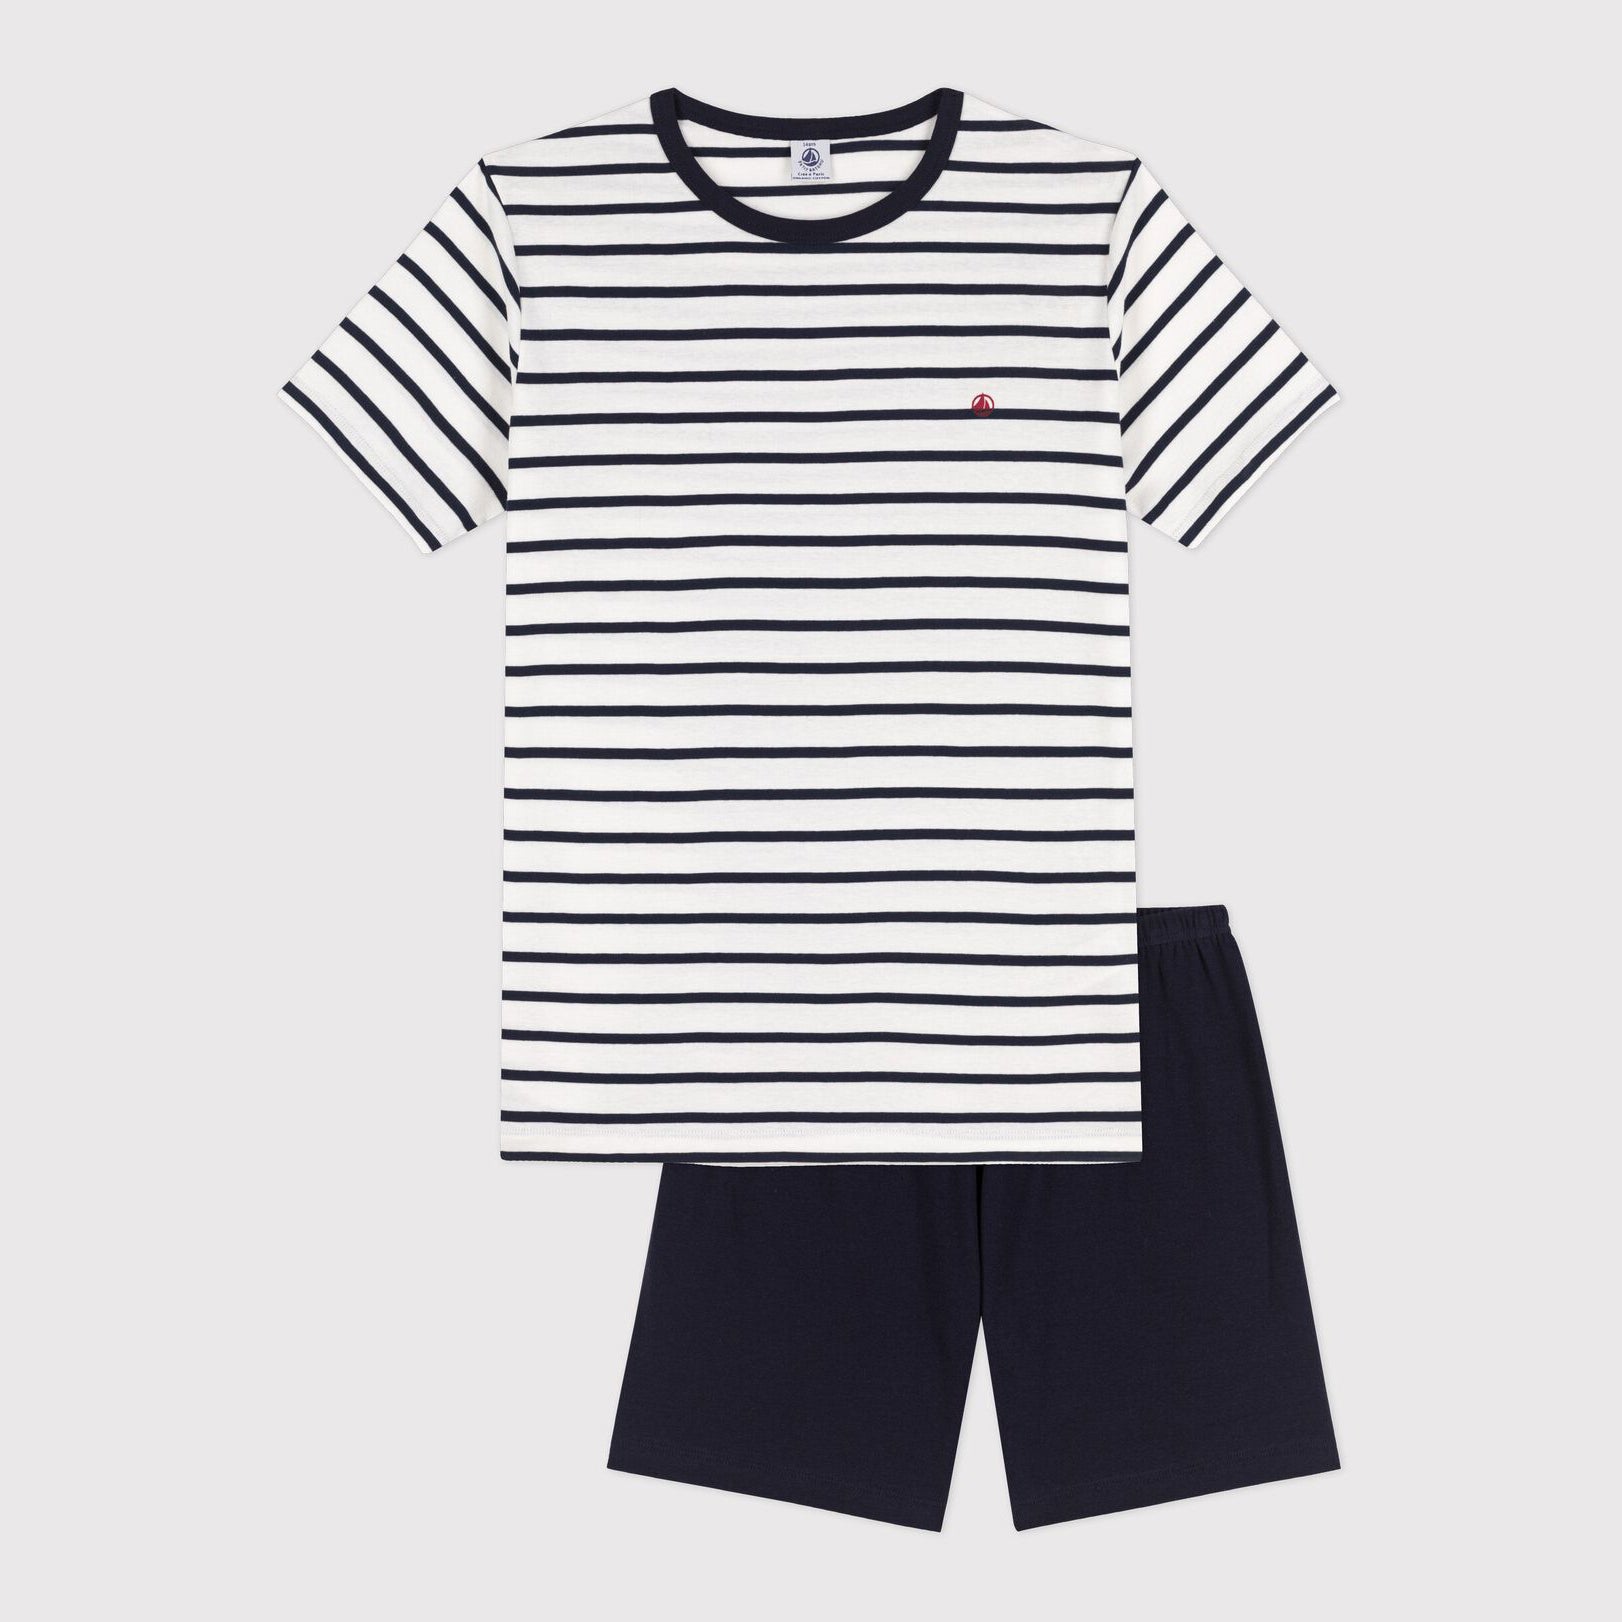 Boys Navy Stripes Cotton Nightwear Set